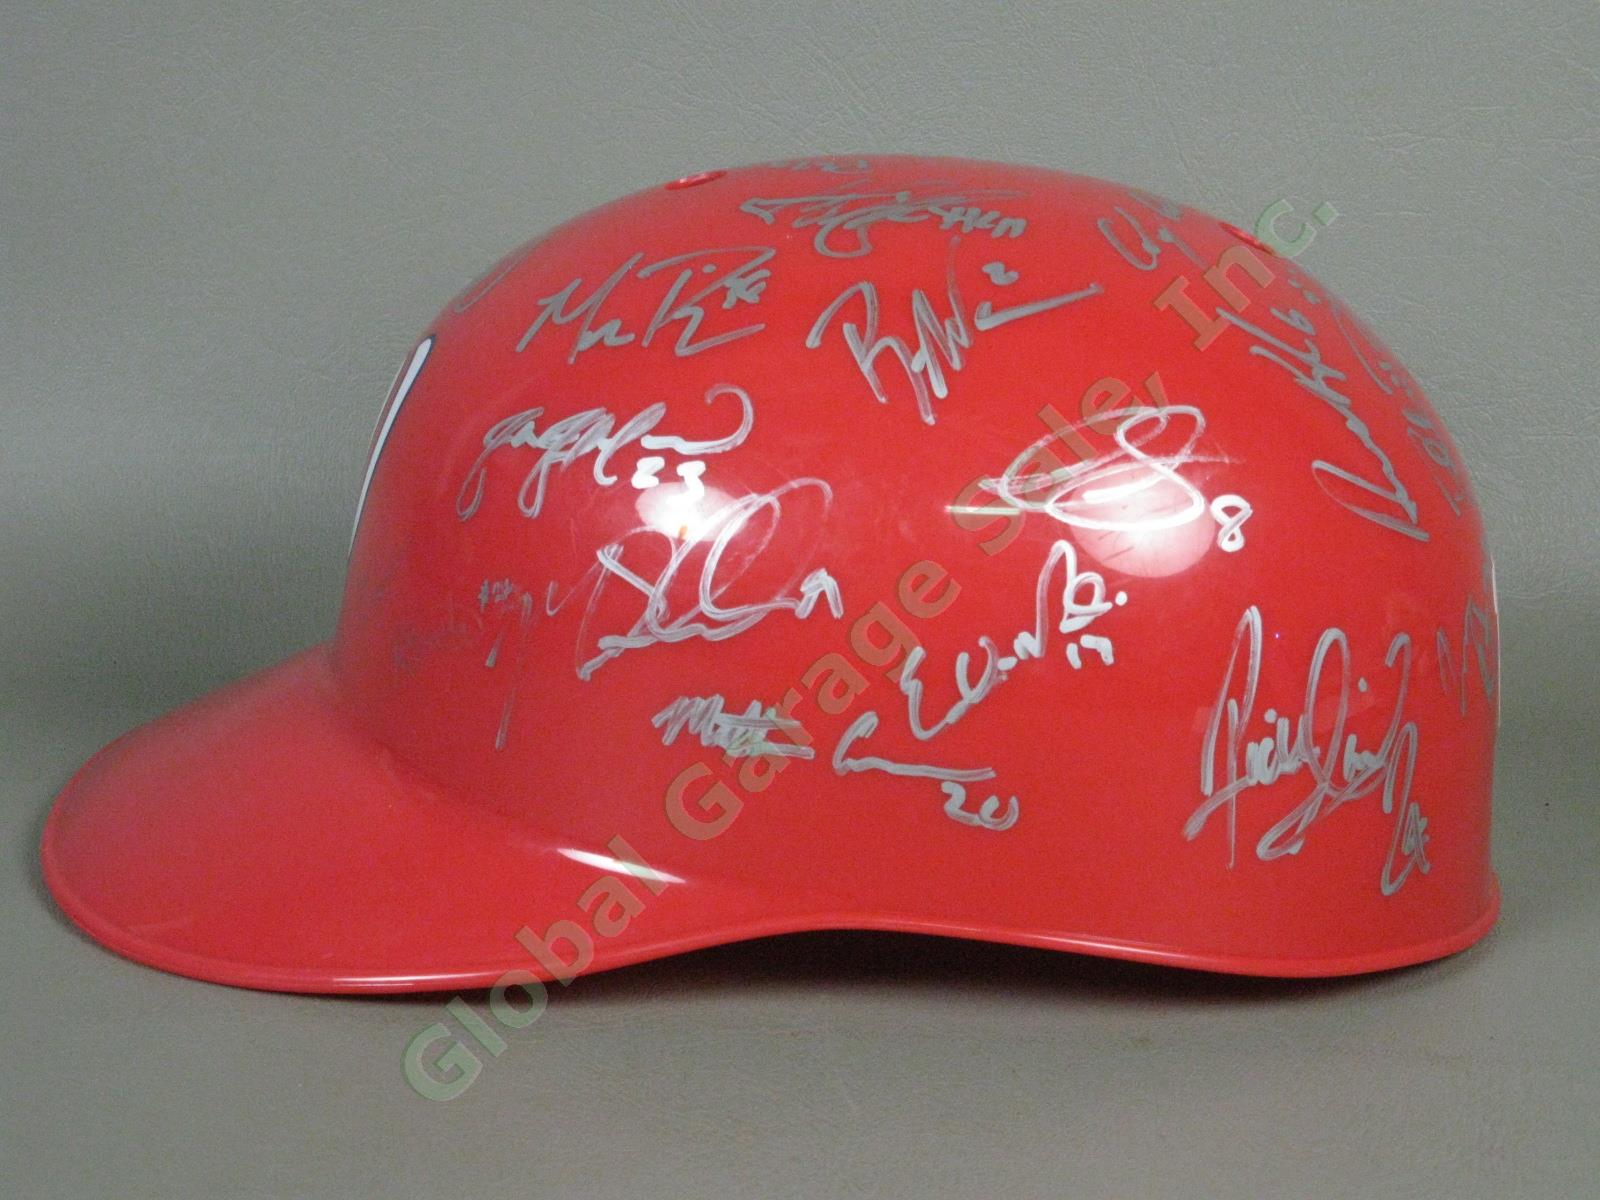 2015 Auburn Doubledays Team Signed Baseball Helmet NYPL Washington Nationals NR 3